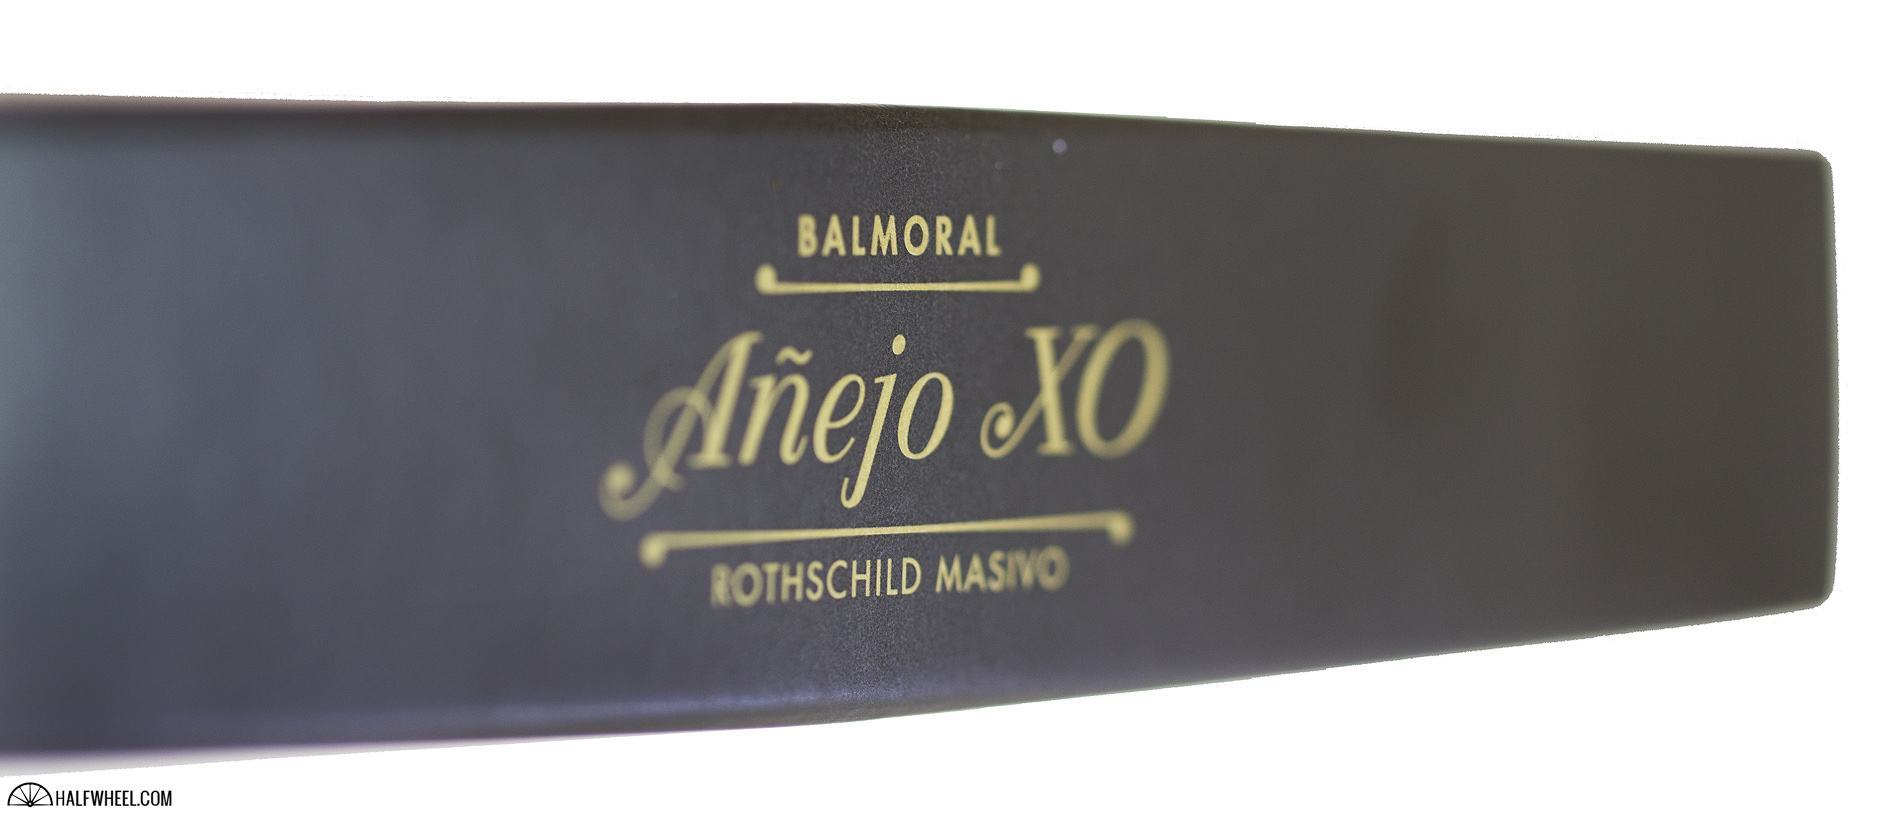 Balmoral Anejo XO Rothschild Masivo Box 1